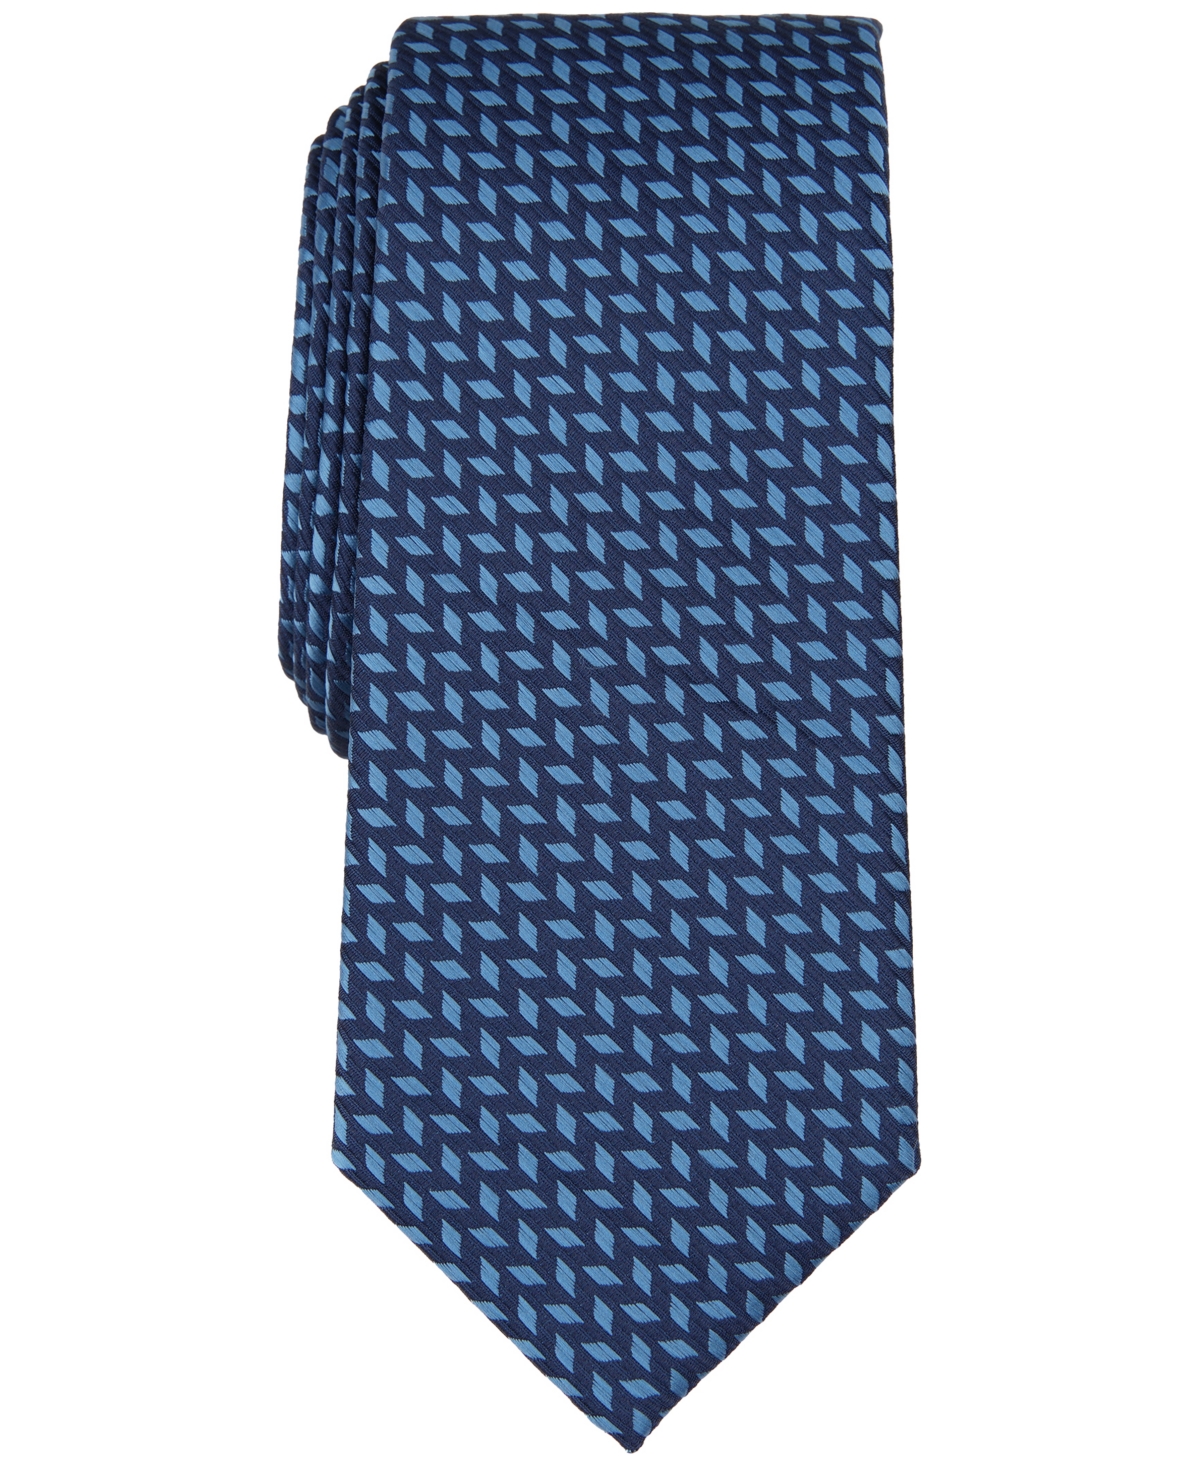 Men's Slim Geo Neat Tie, Created for Macy's - Navy